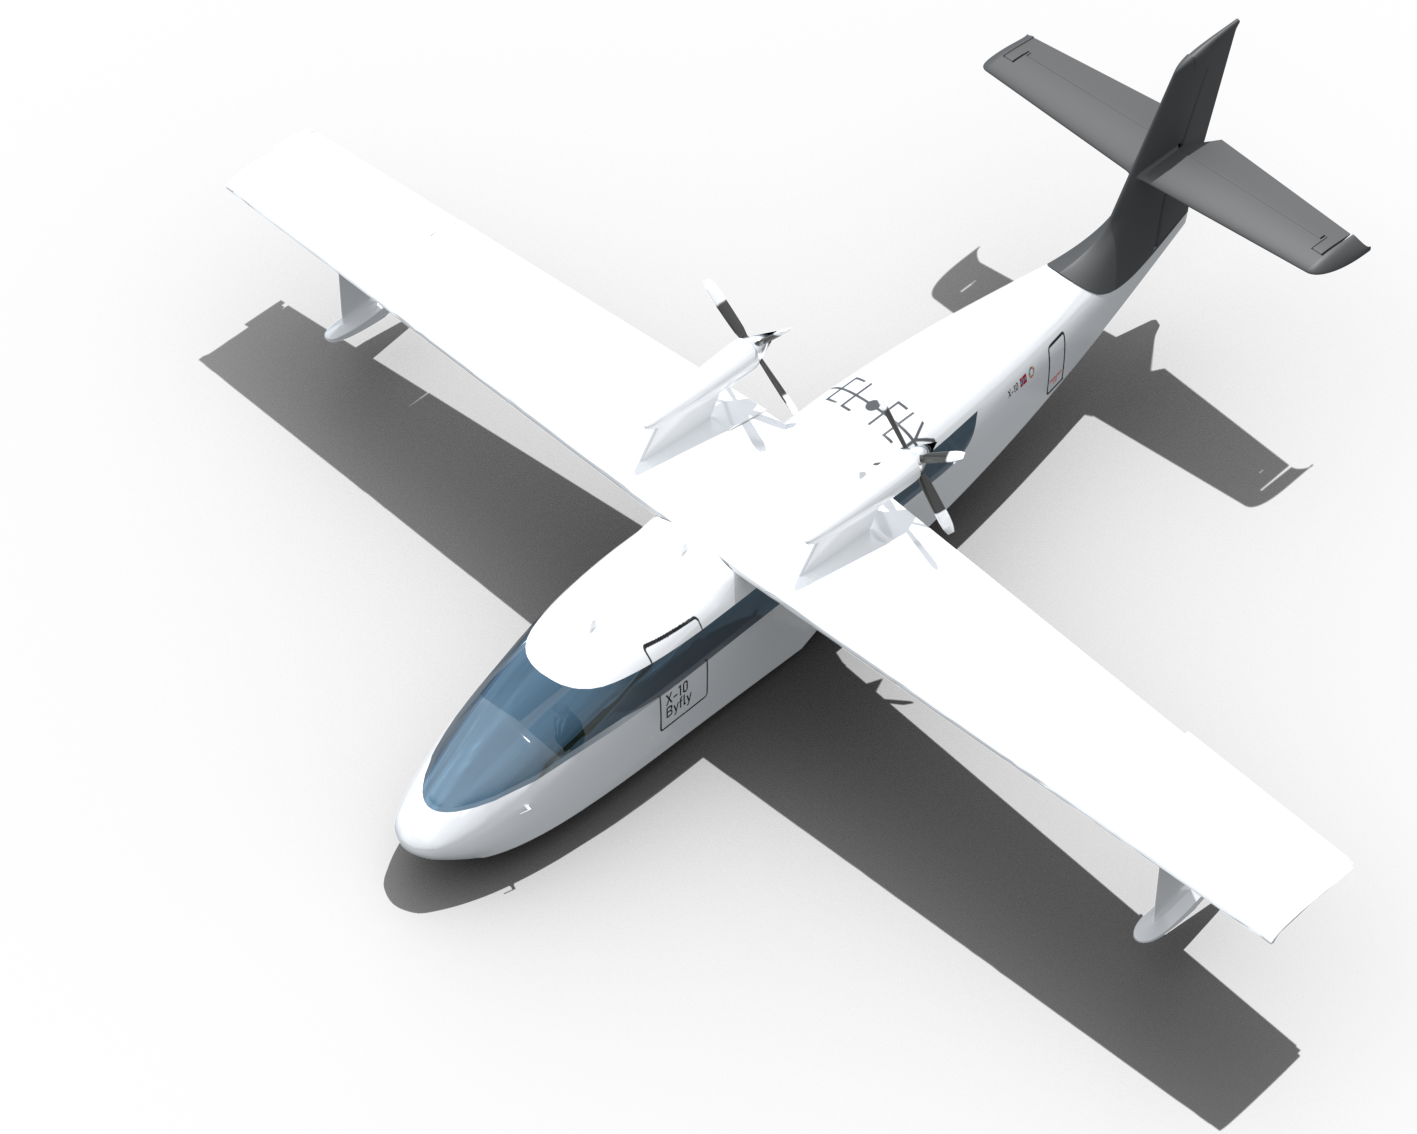 The Seaplane